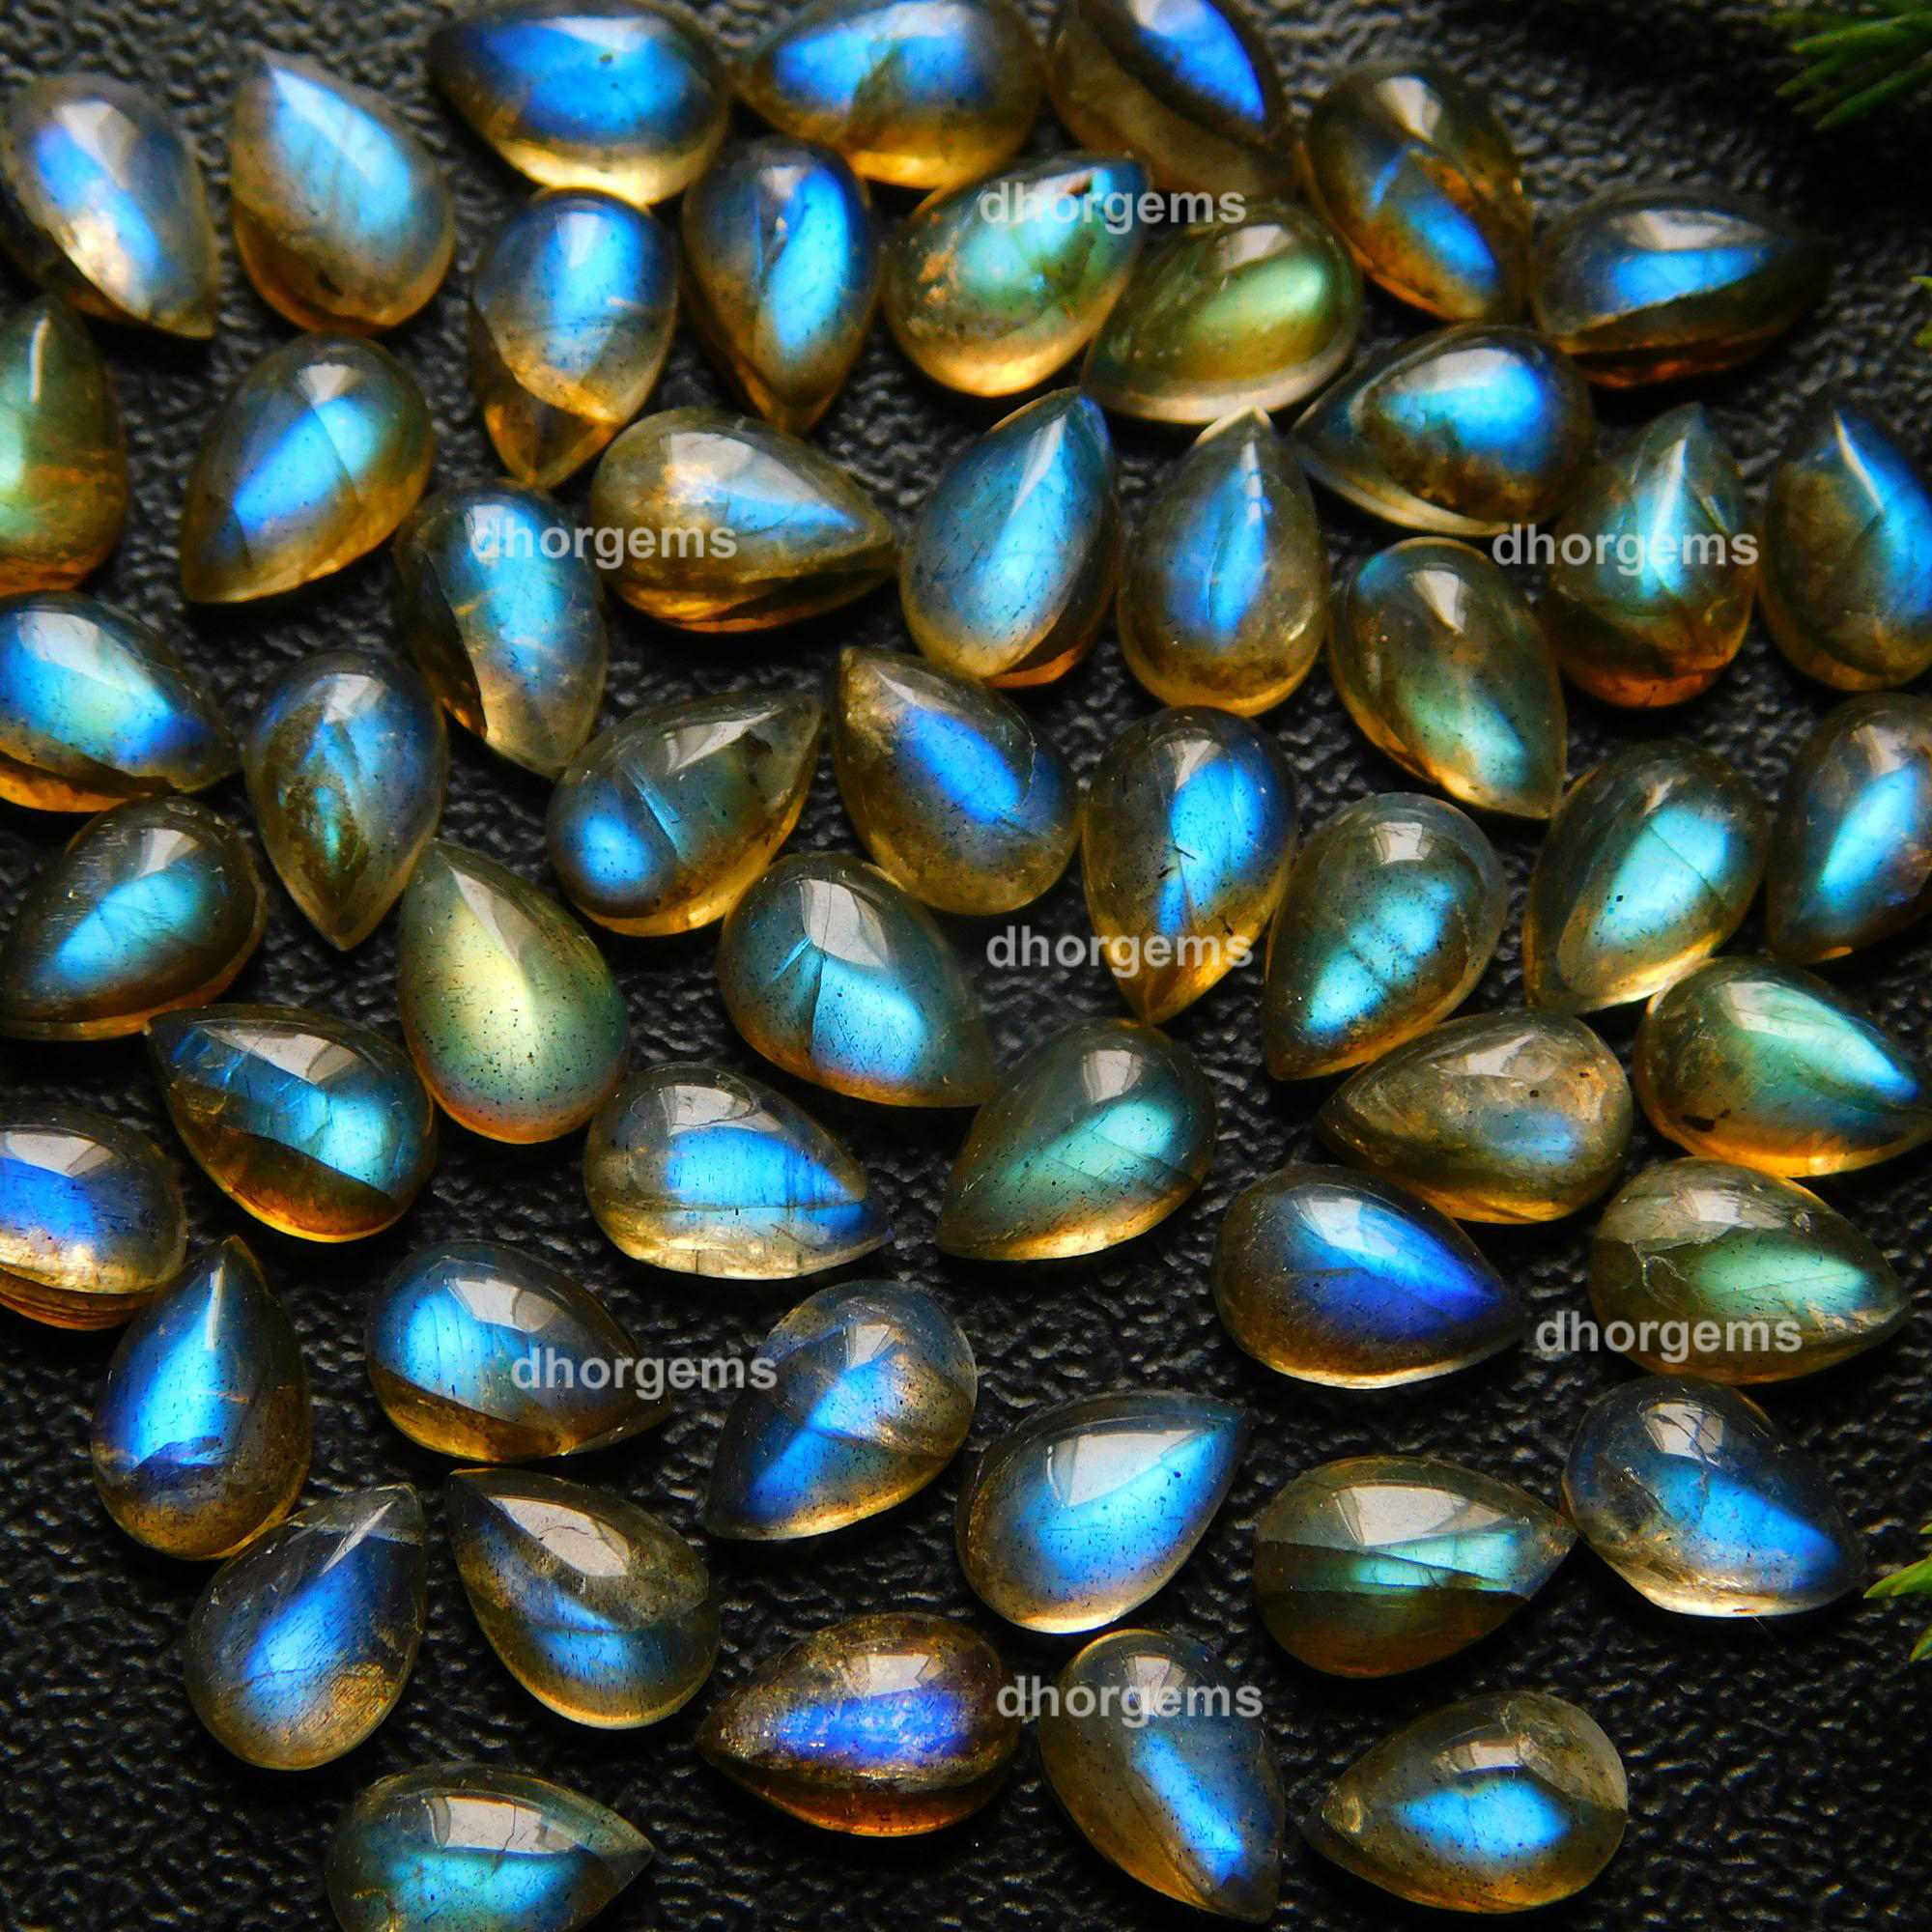 52Pcs 25.4Cts Natural Blue Fire Labradorite Loose Cabochon Calibrated Pear Shape Gemstone Lot 4x6mm#9247